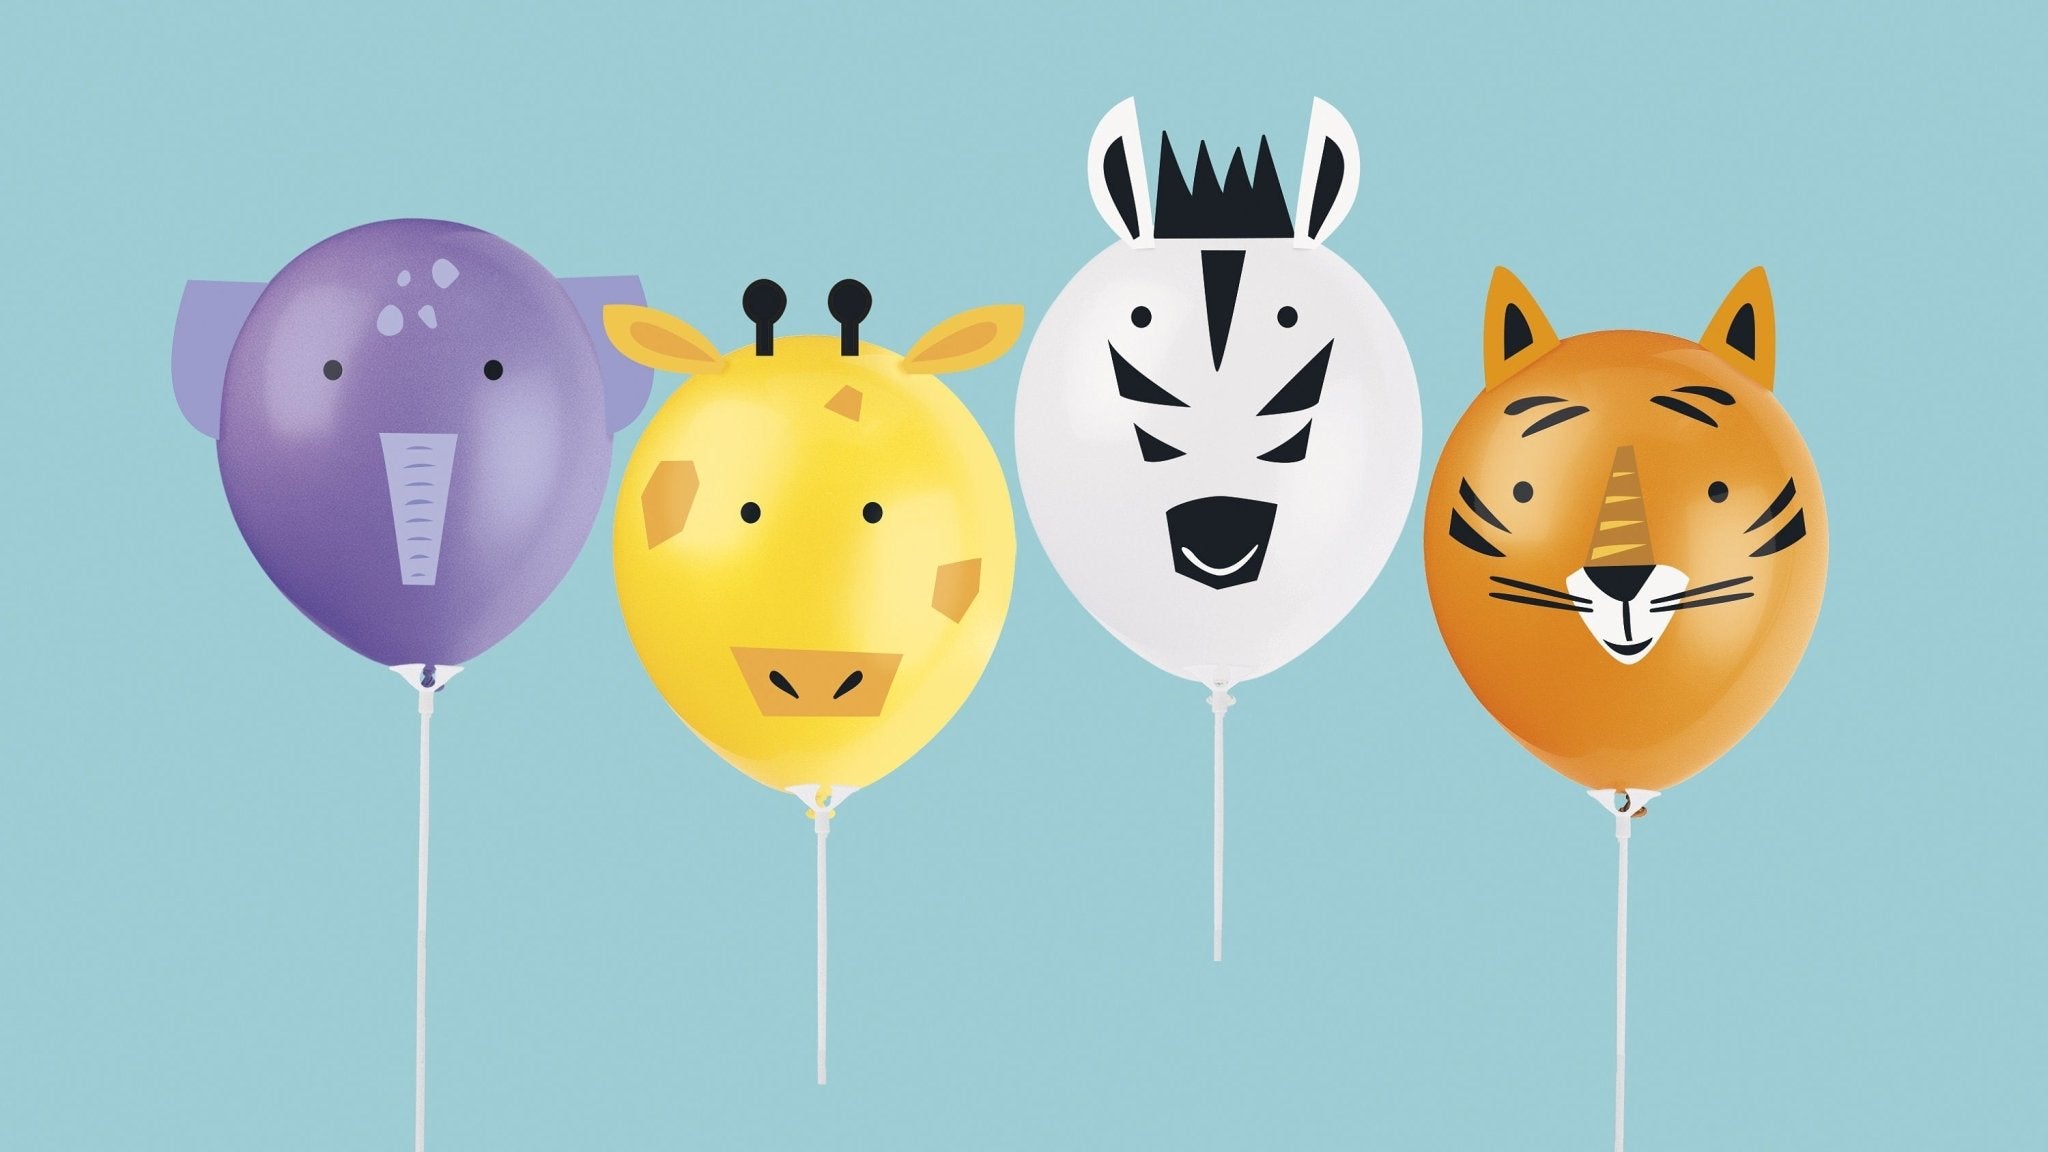 Safari Party Animal Masks - Stesha Party - animal, birthday, birthday boy